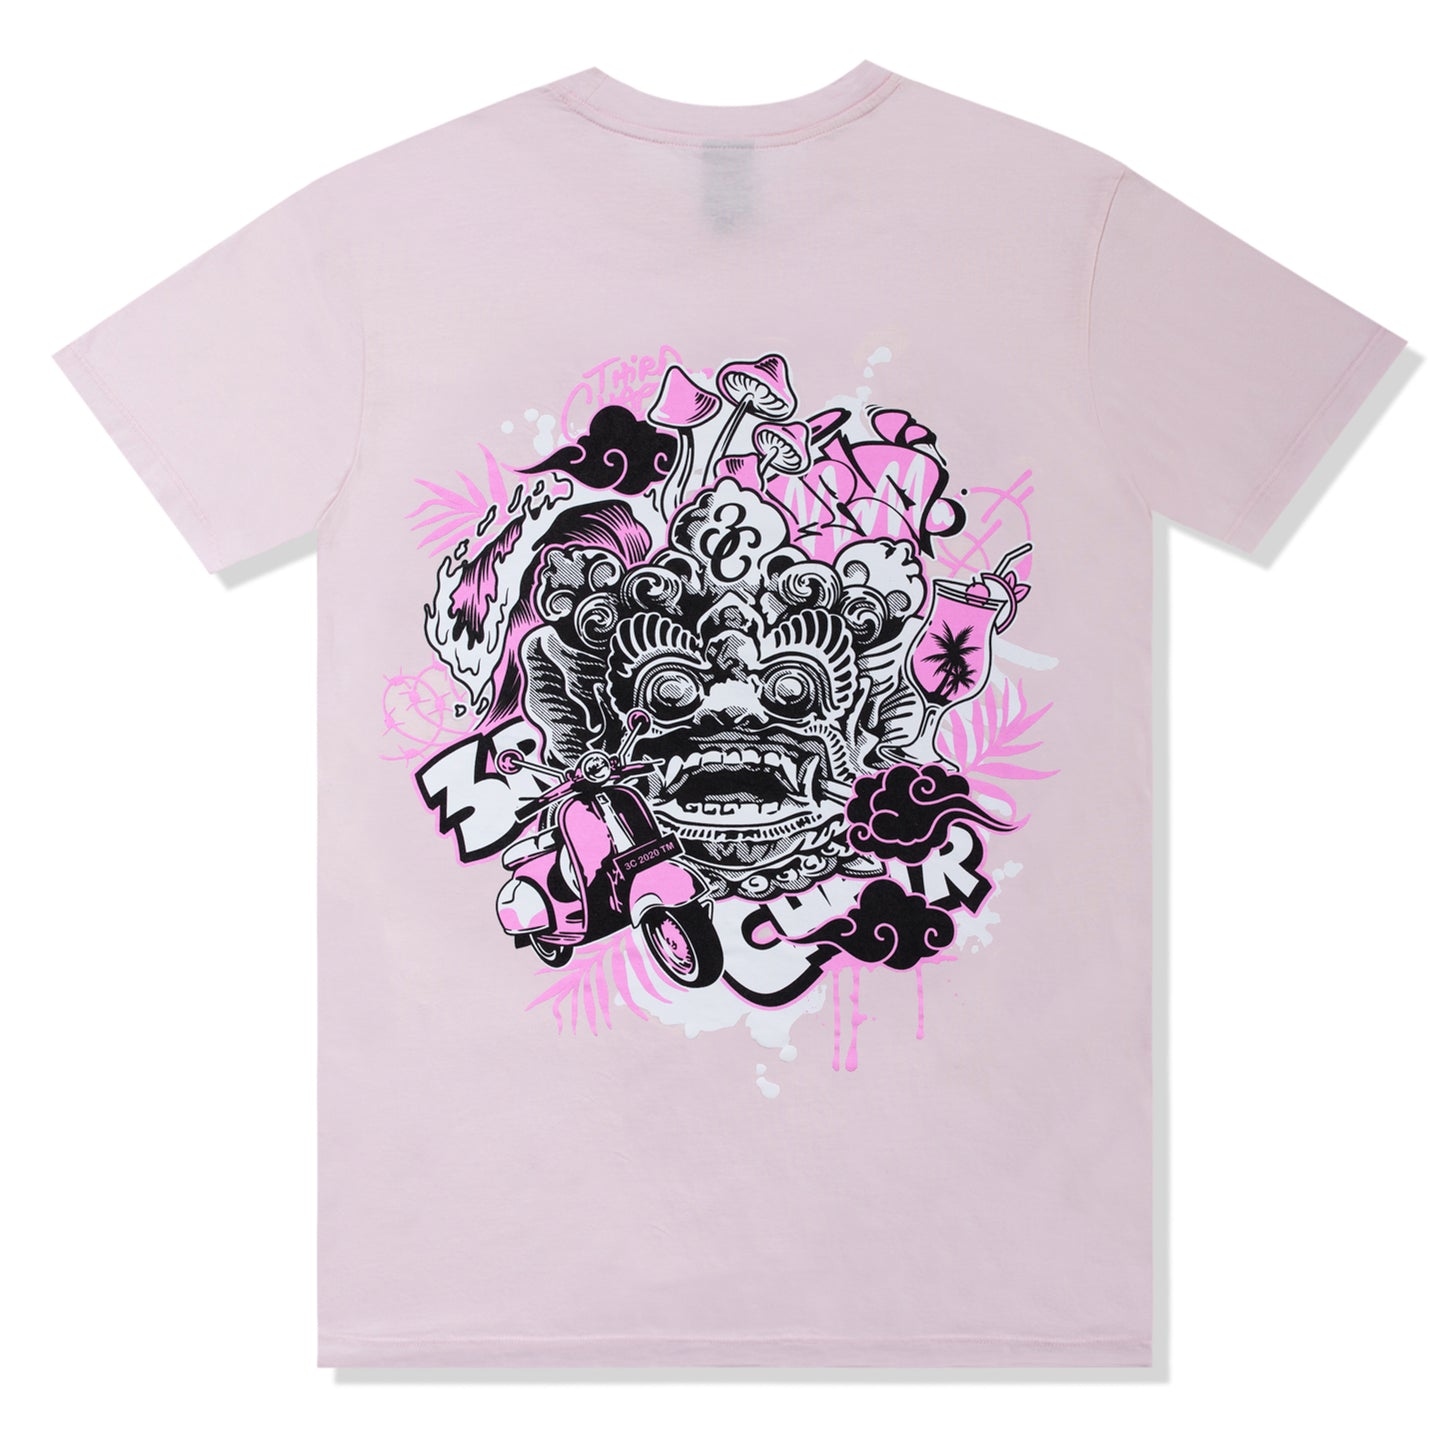 Isle Of Gods T-Shirt Pink